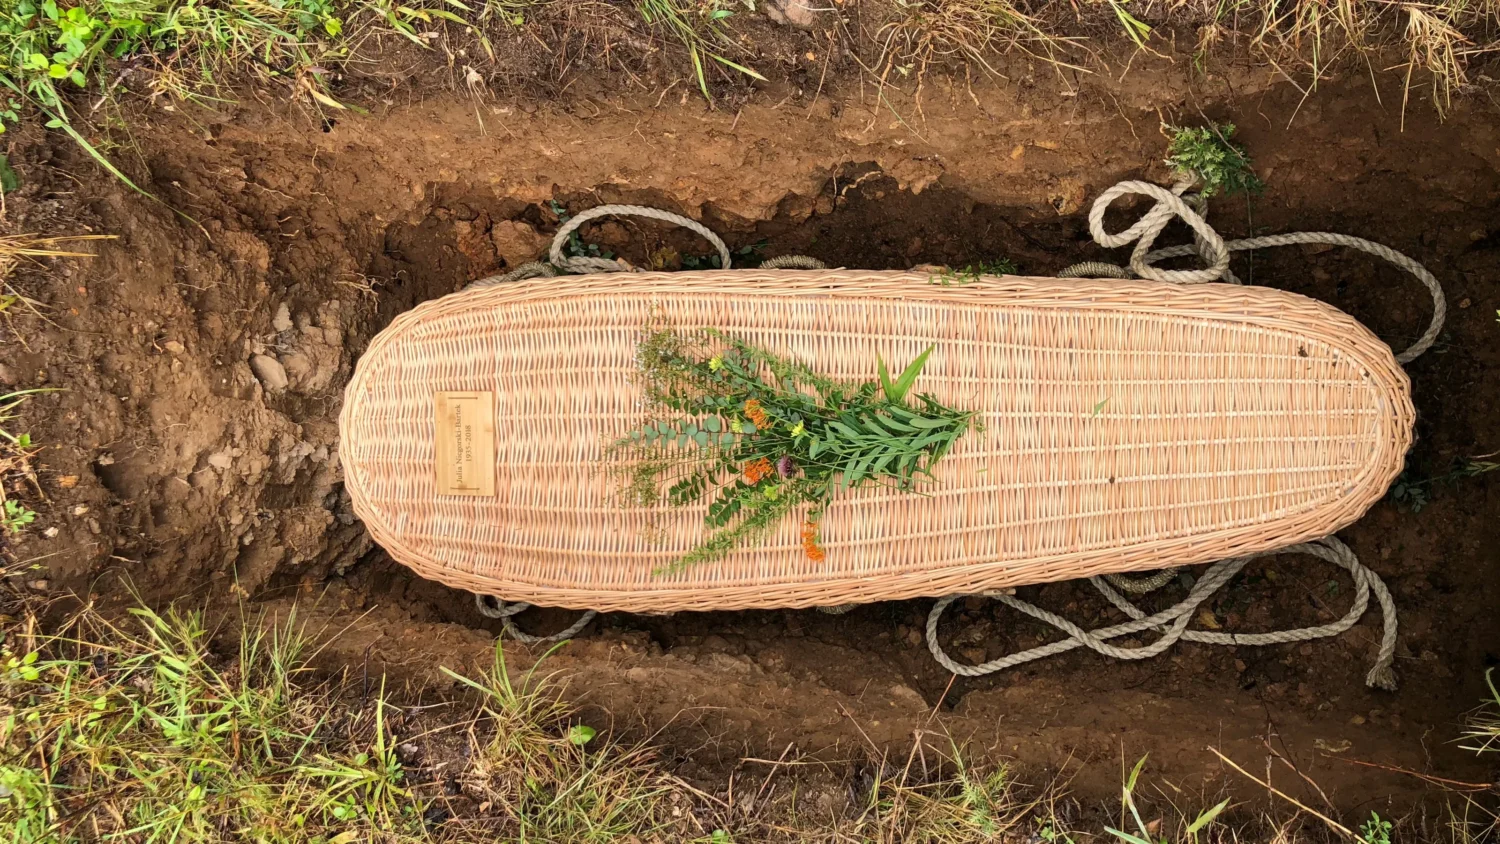 environmentally friendly burial options